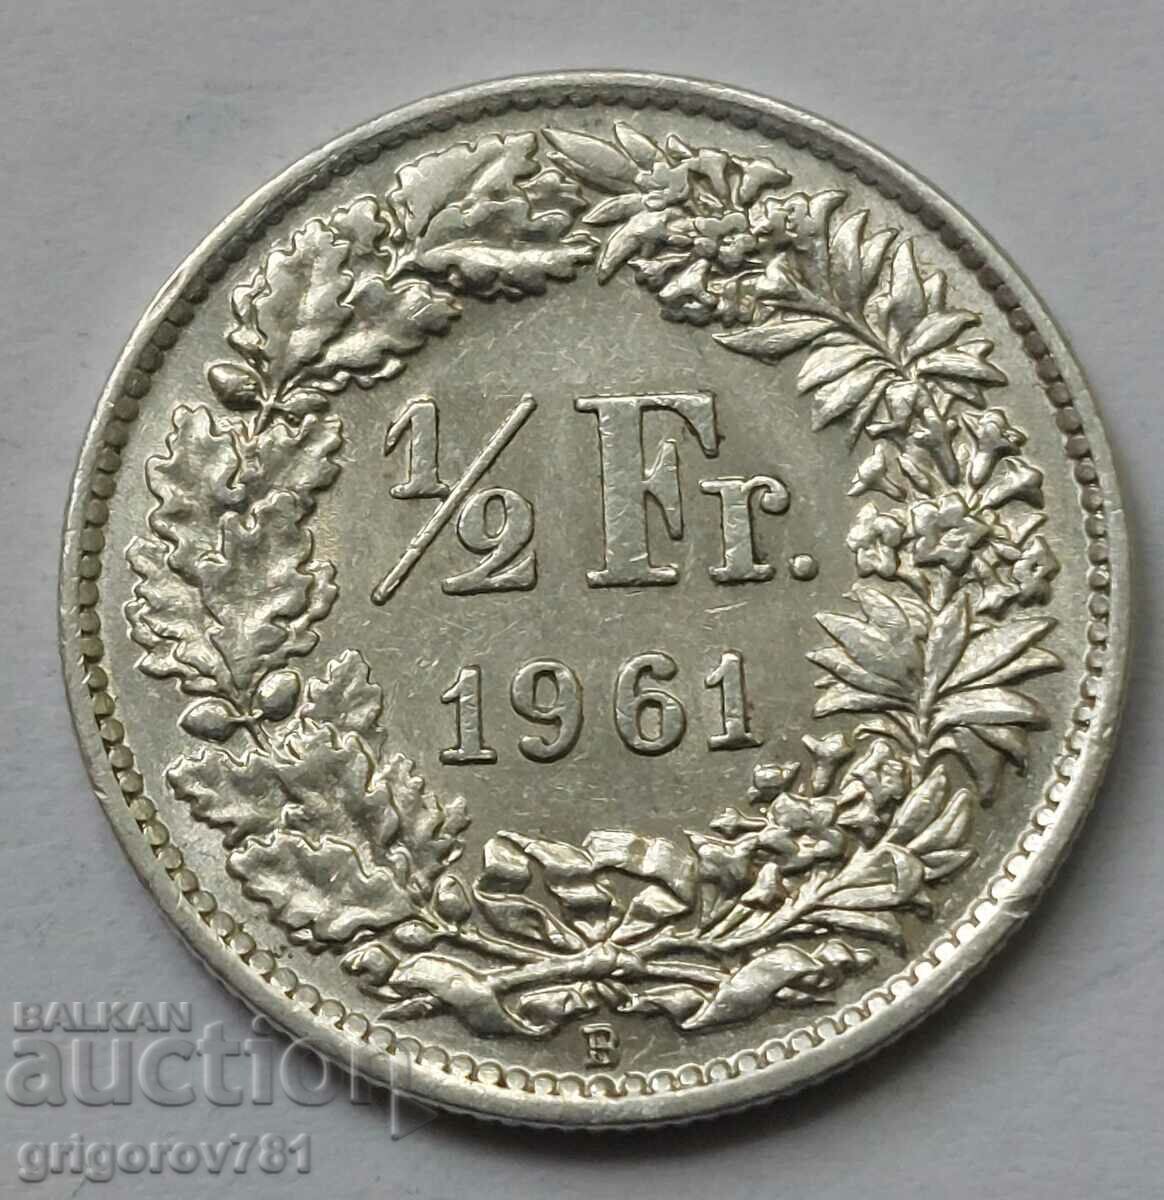 1/2 Franc Silver Switzerland 1961 B - Silver Coin #94